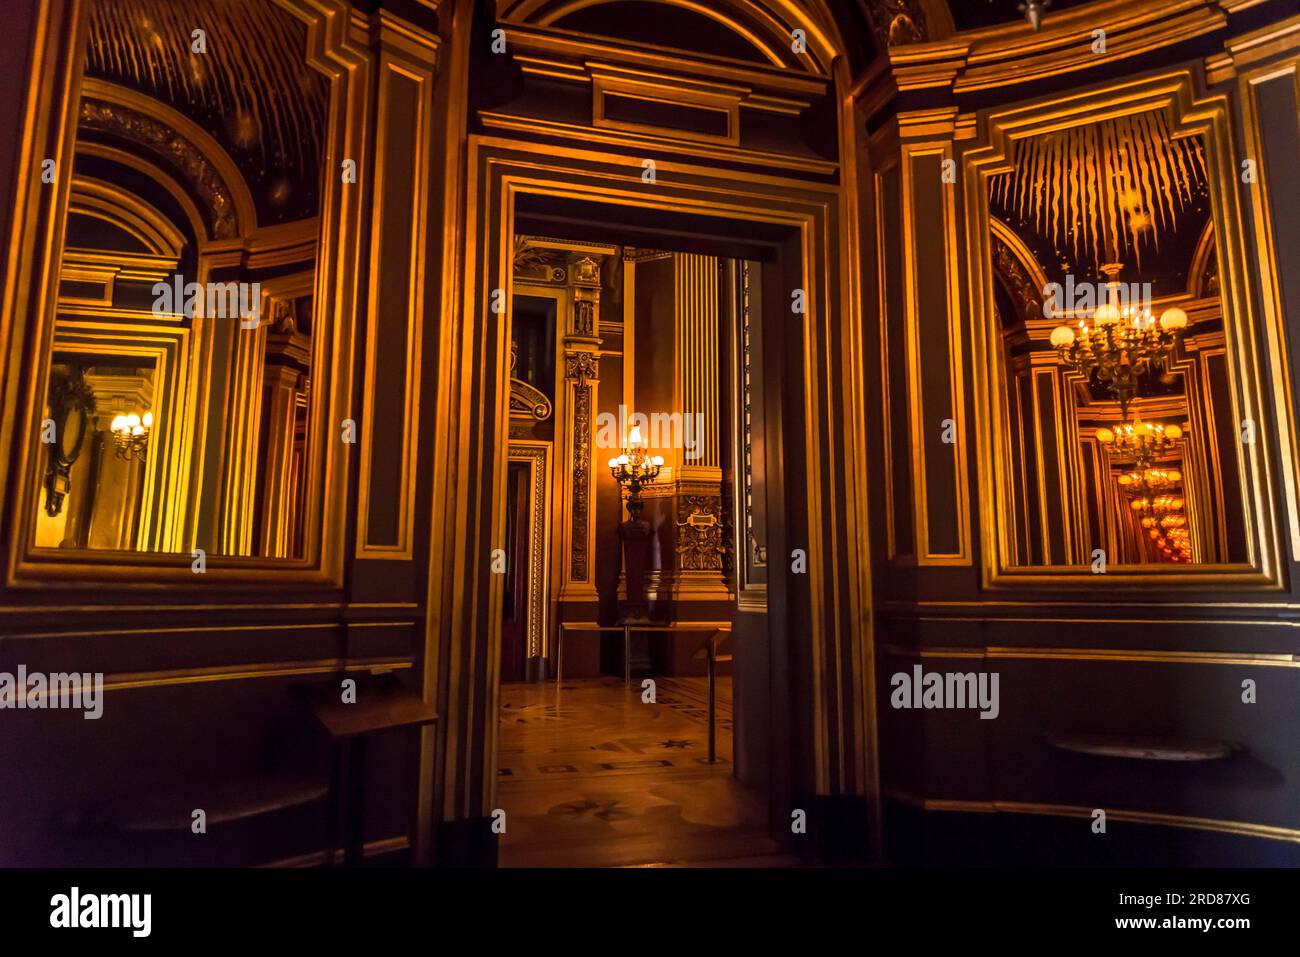 Extravagant interior of the Palais Garnier, a famous Opera House, Paris, France Stock Photo